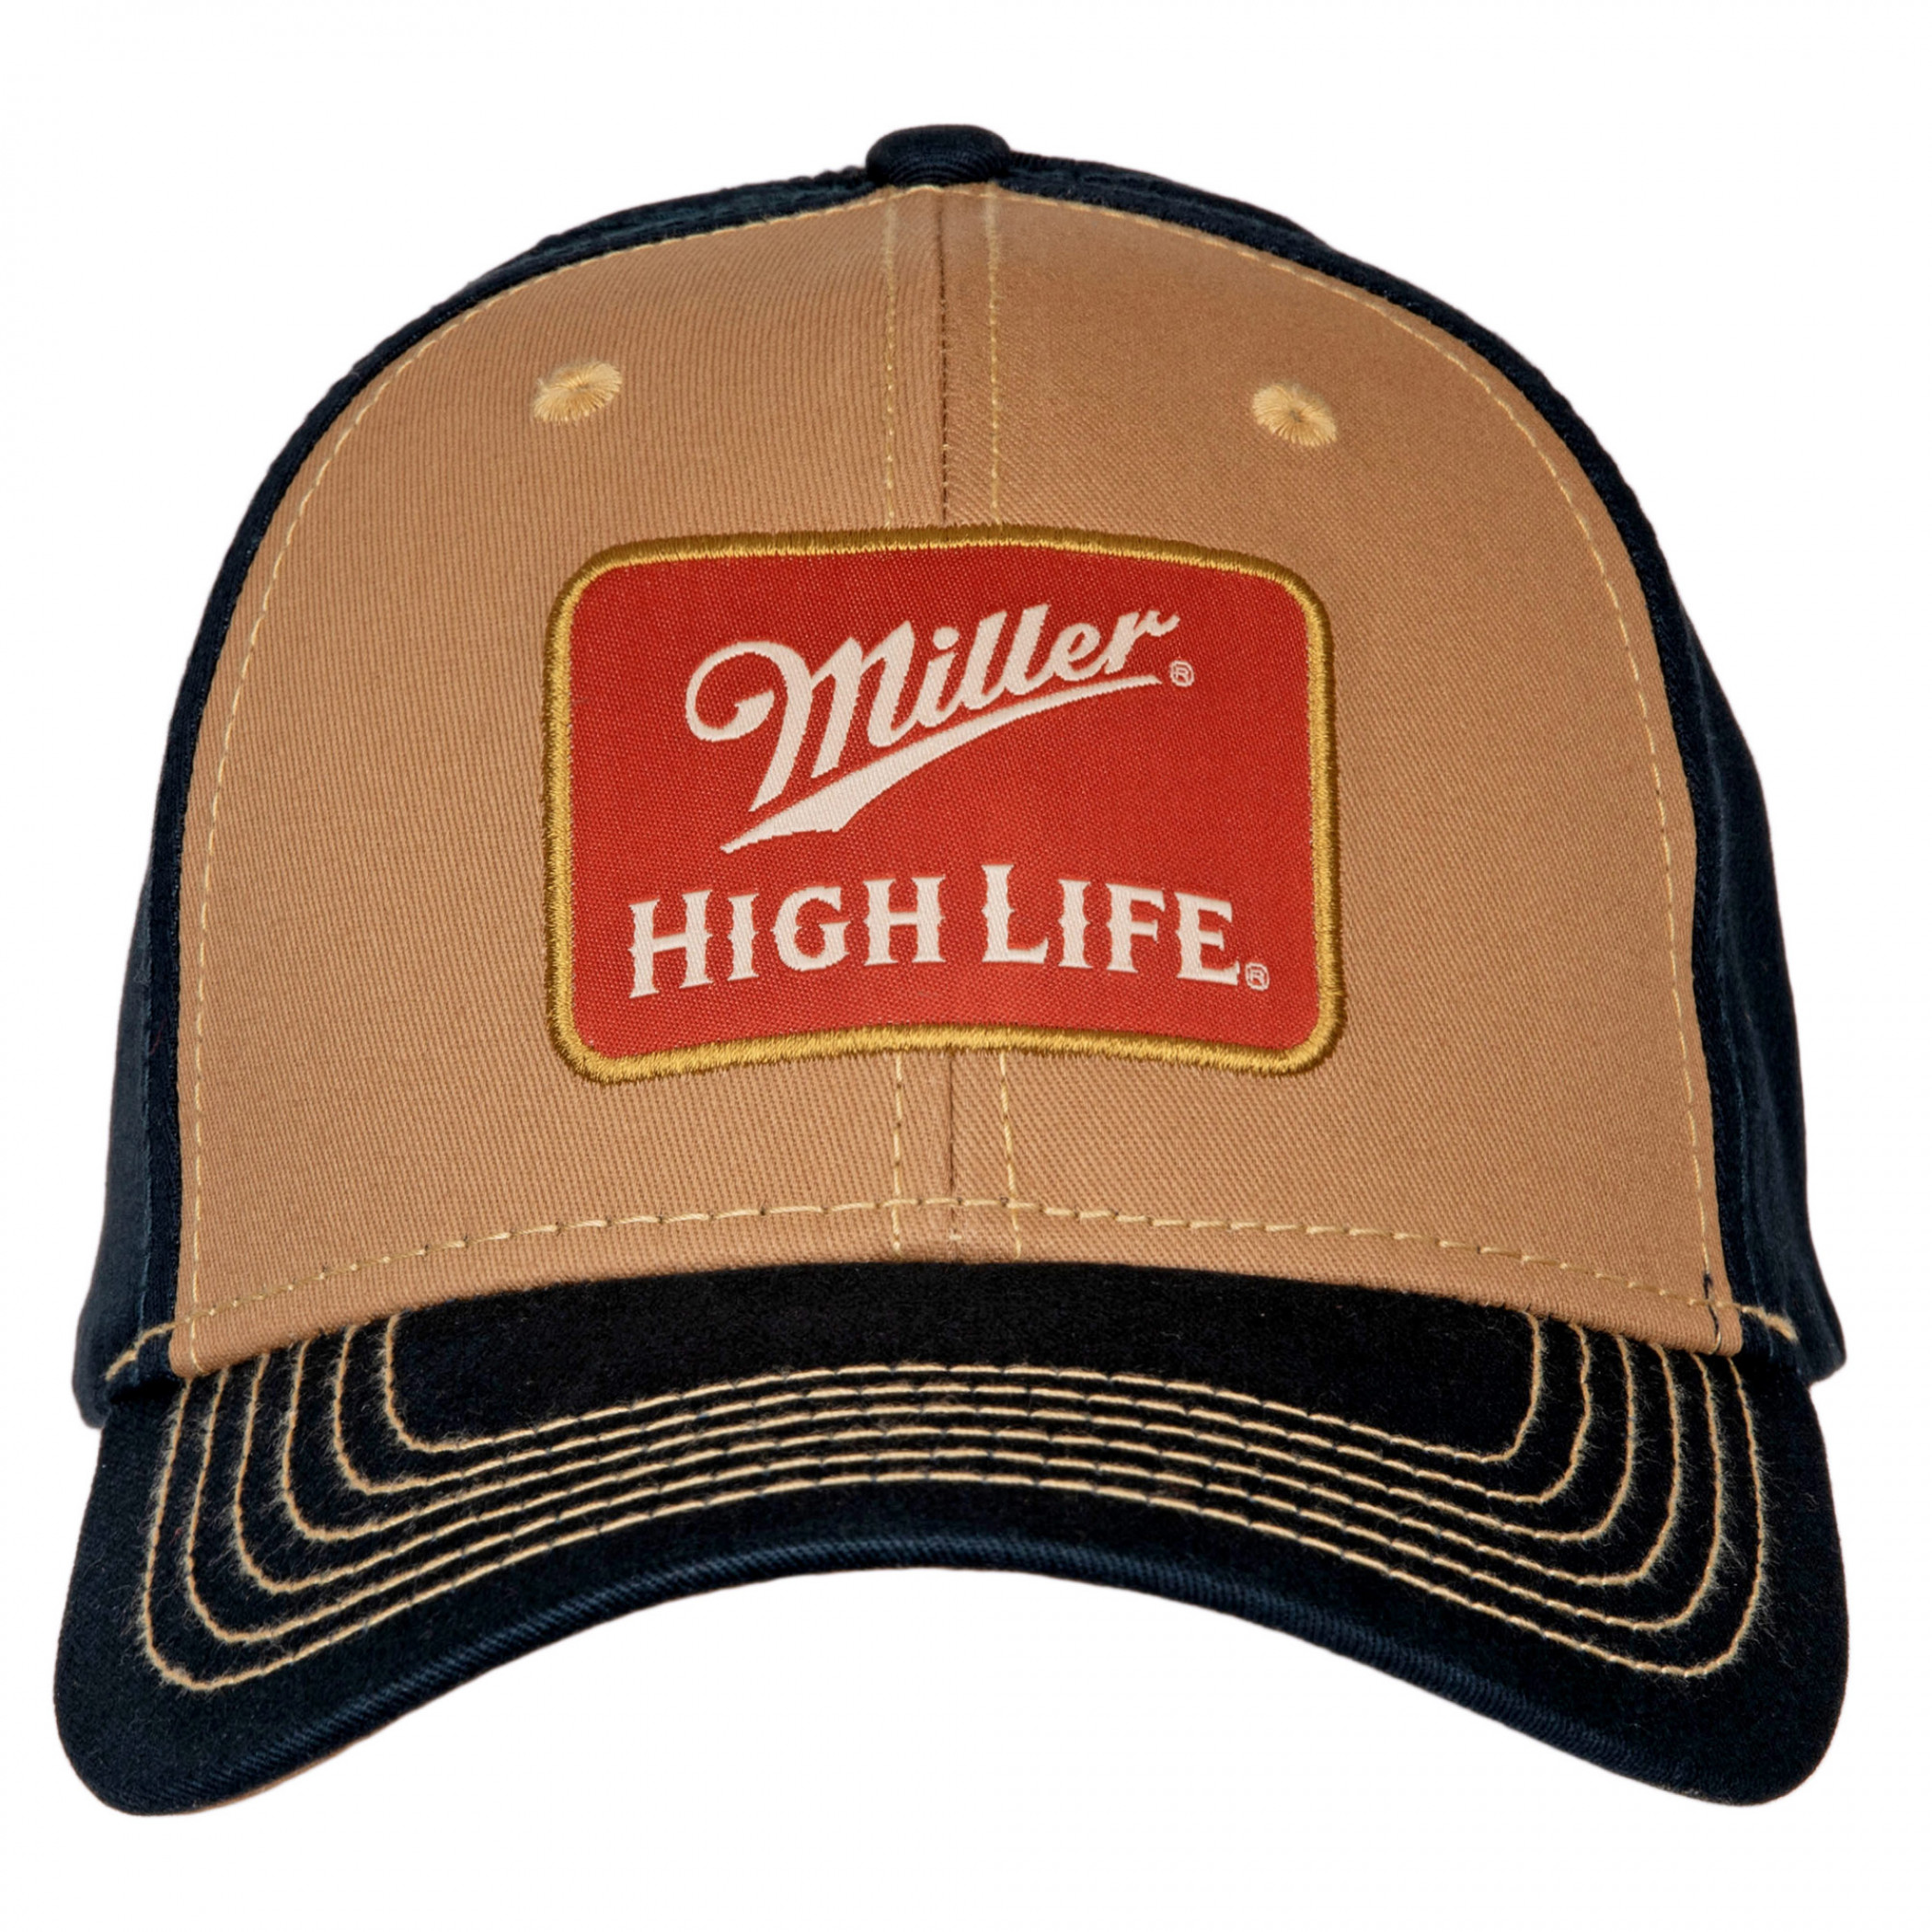 Miller High Life Cotton Twill Snapback Hat